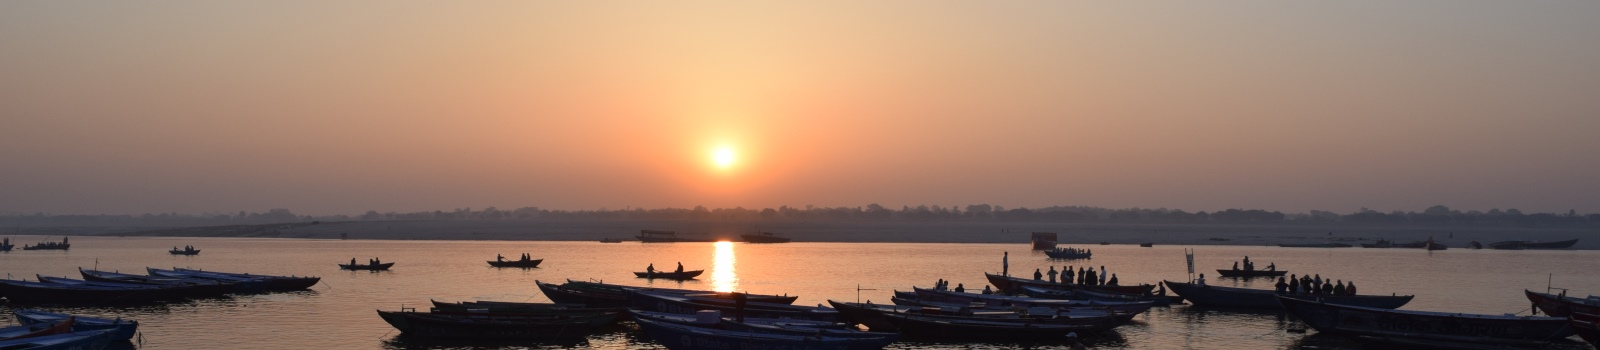 Varanasi – La vida después de la muerte